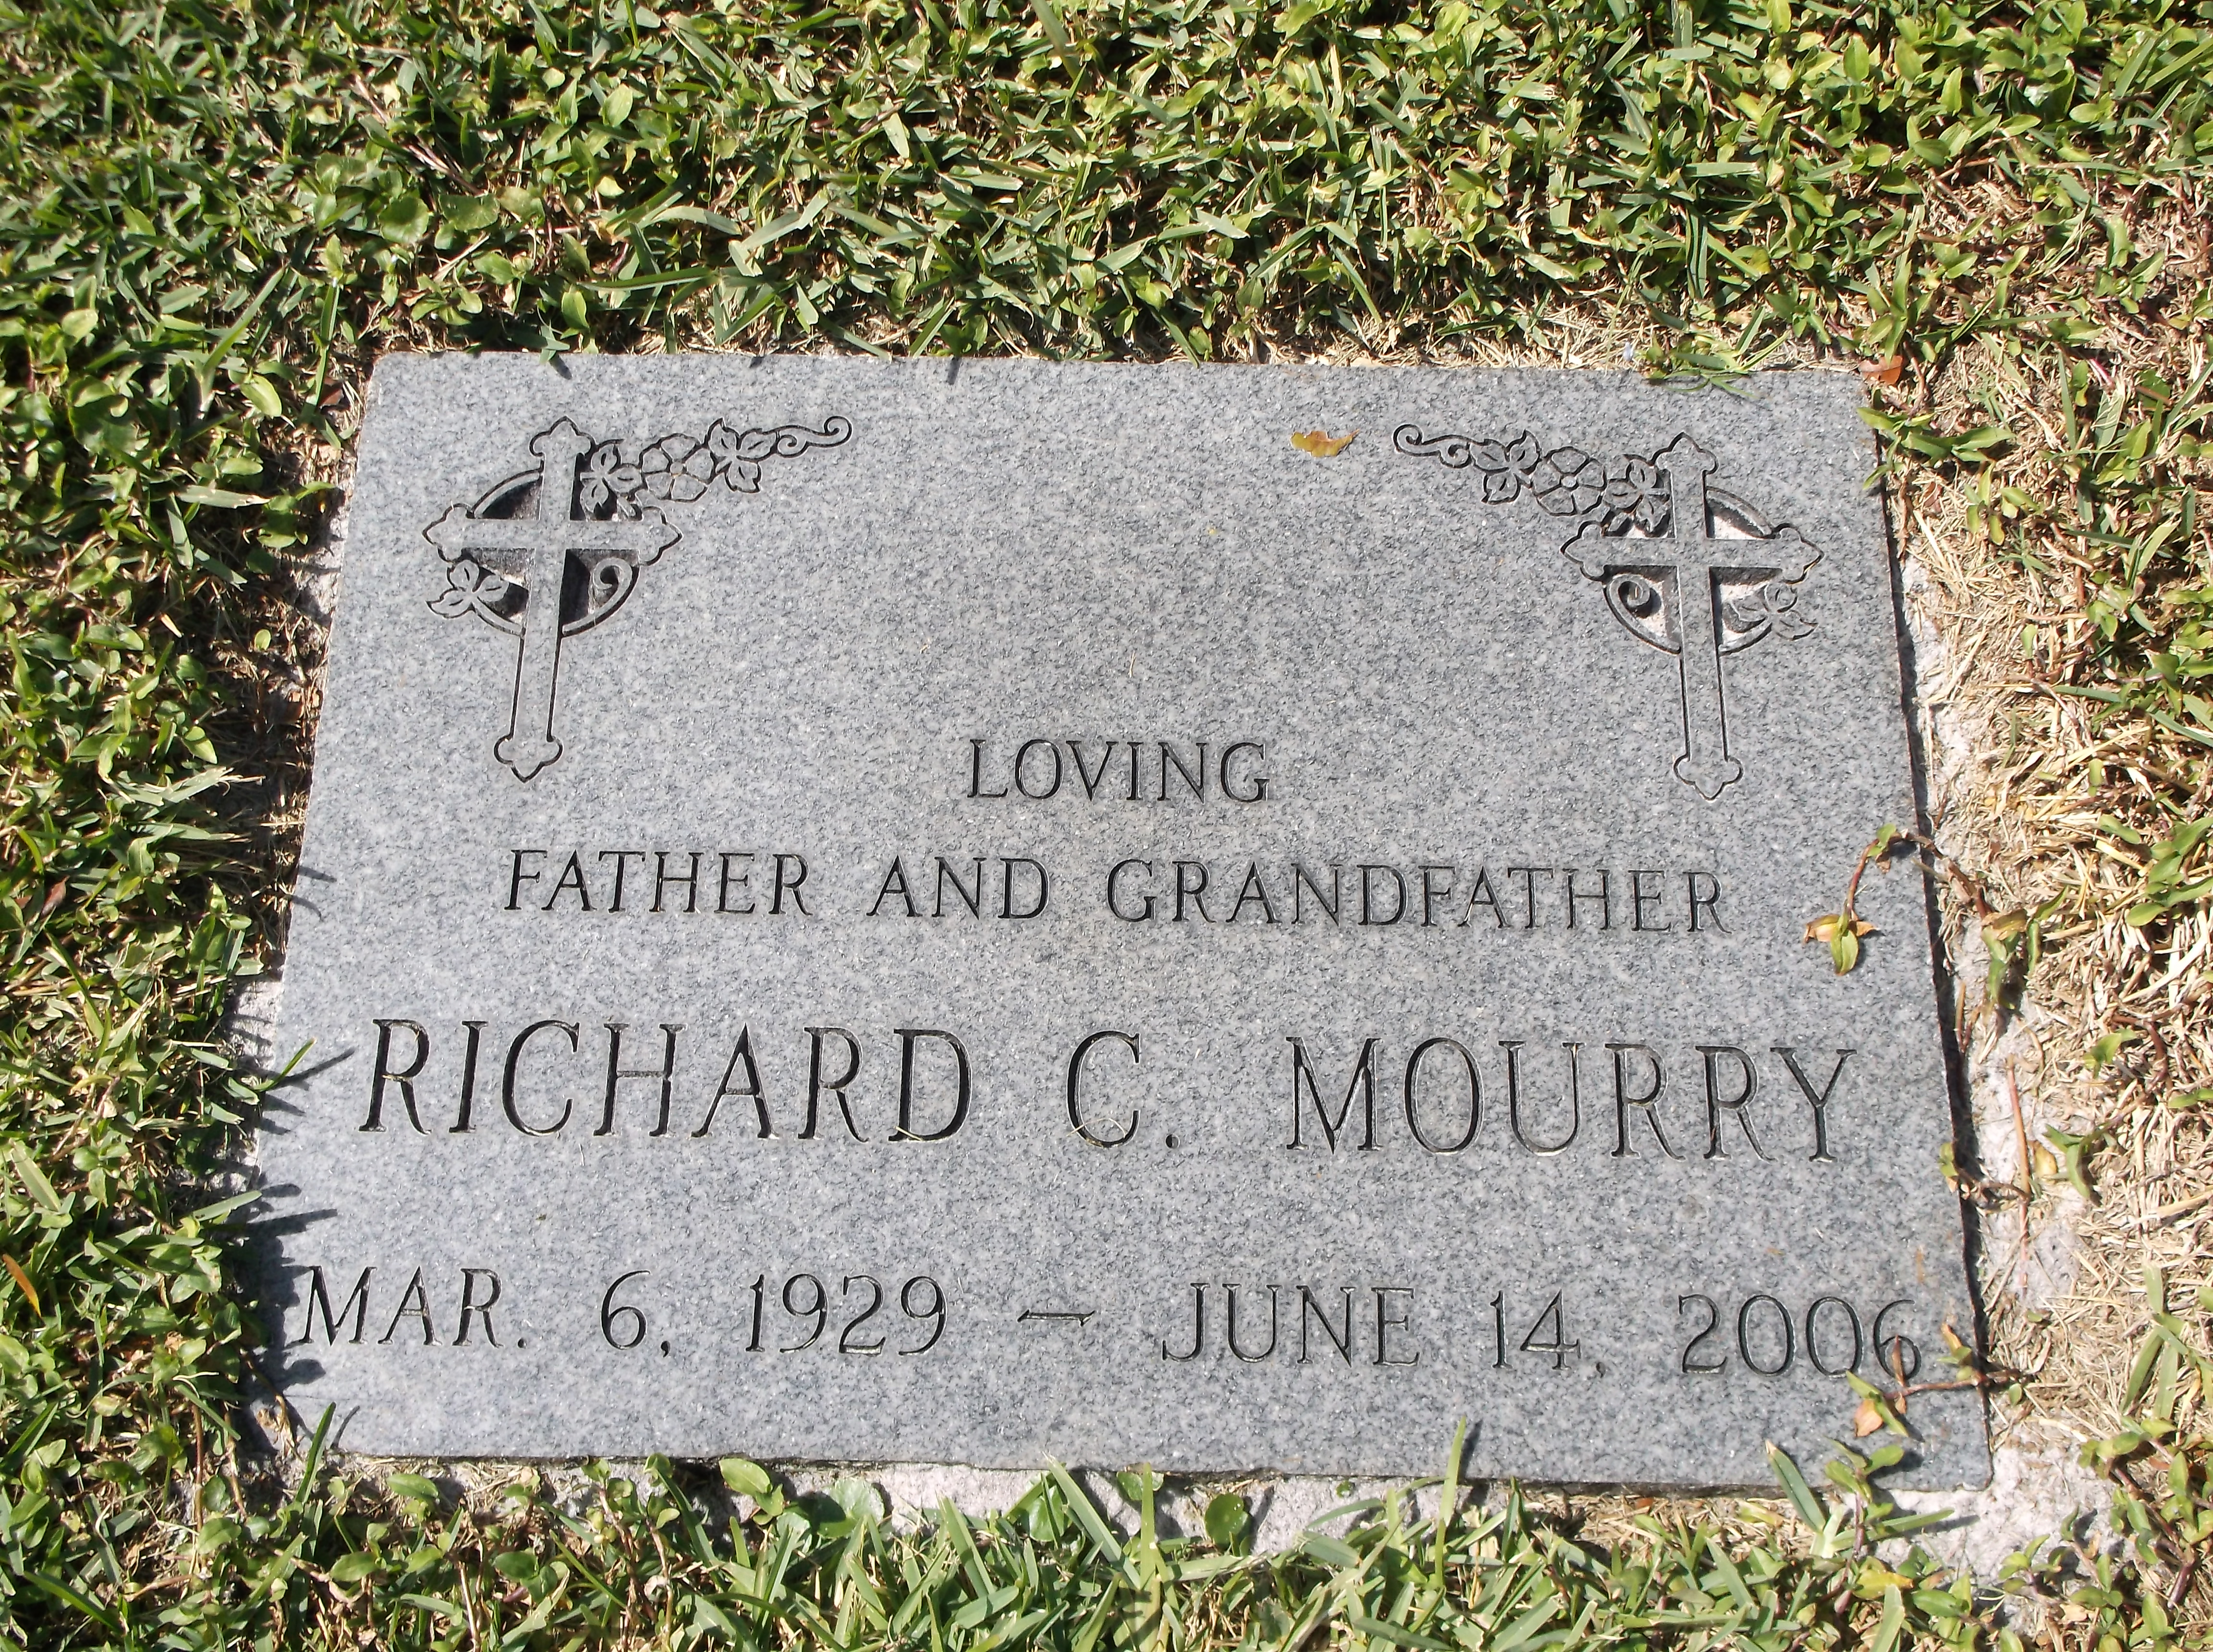 Richard C Mourry